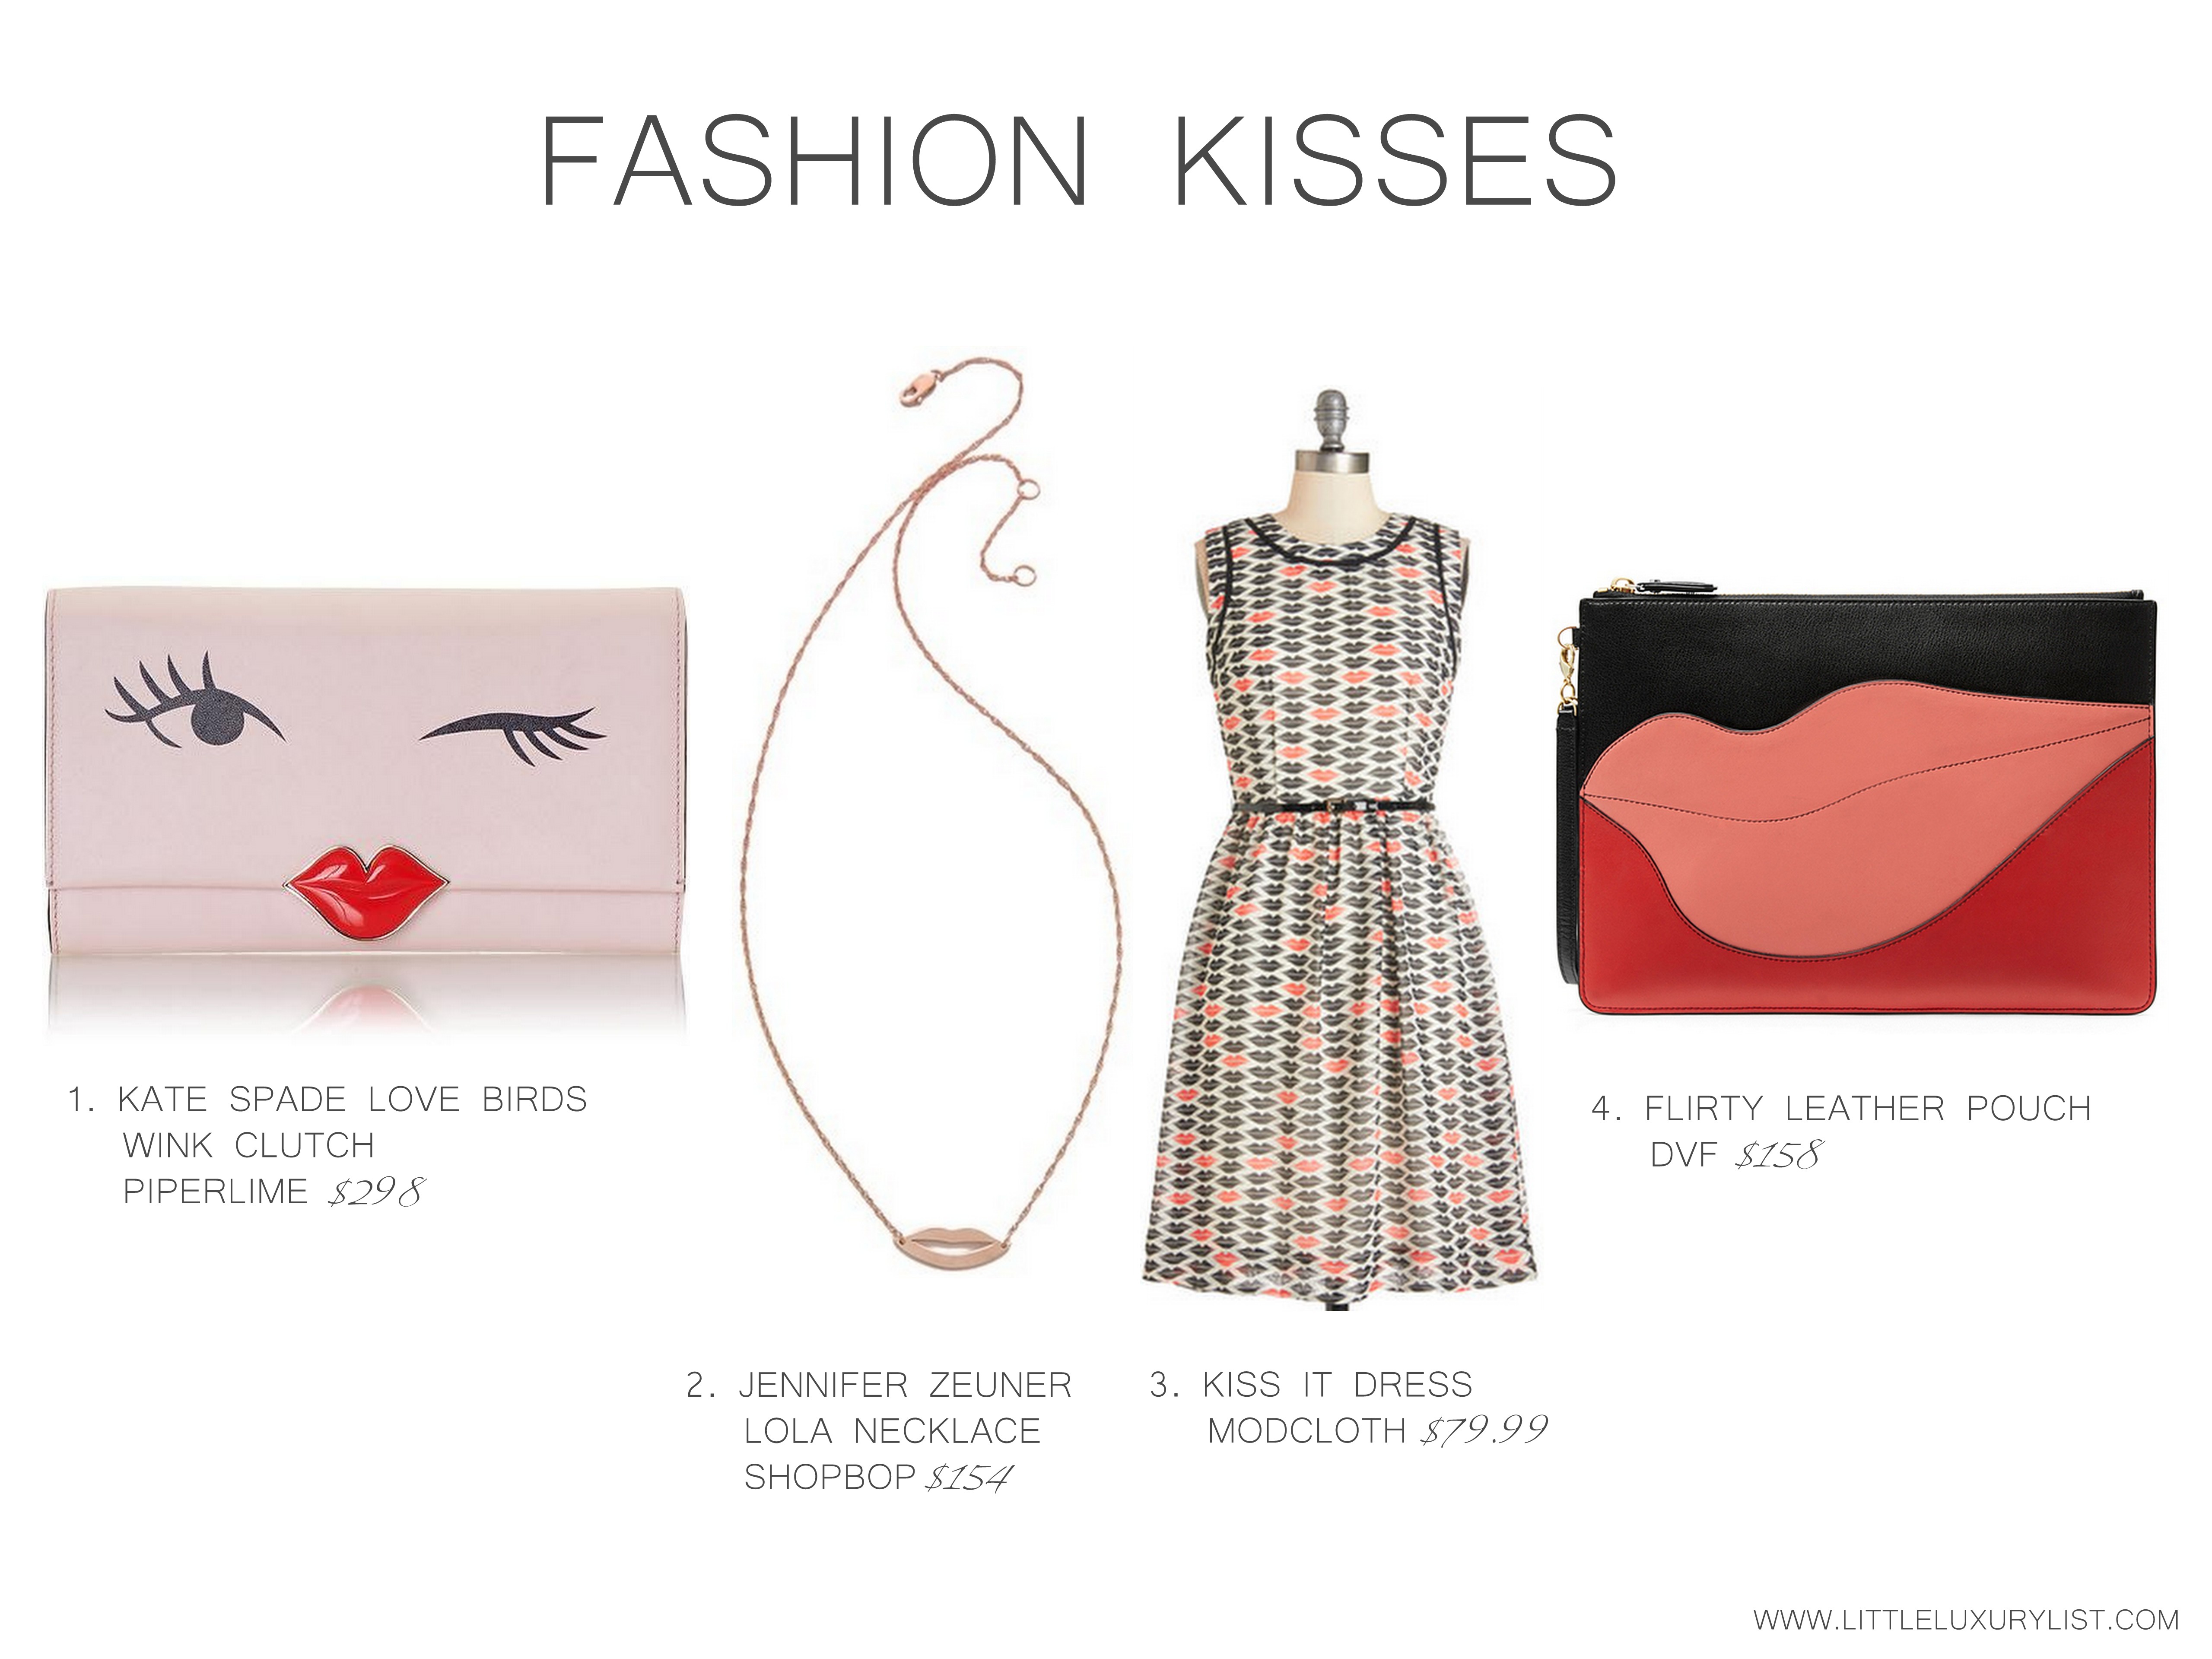 Fashion kisses by little luxury list